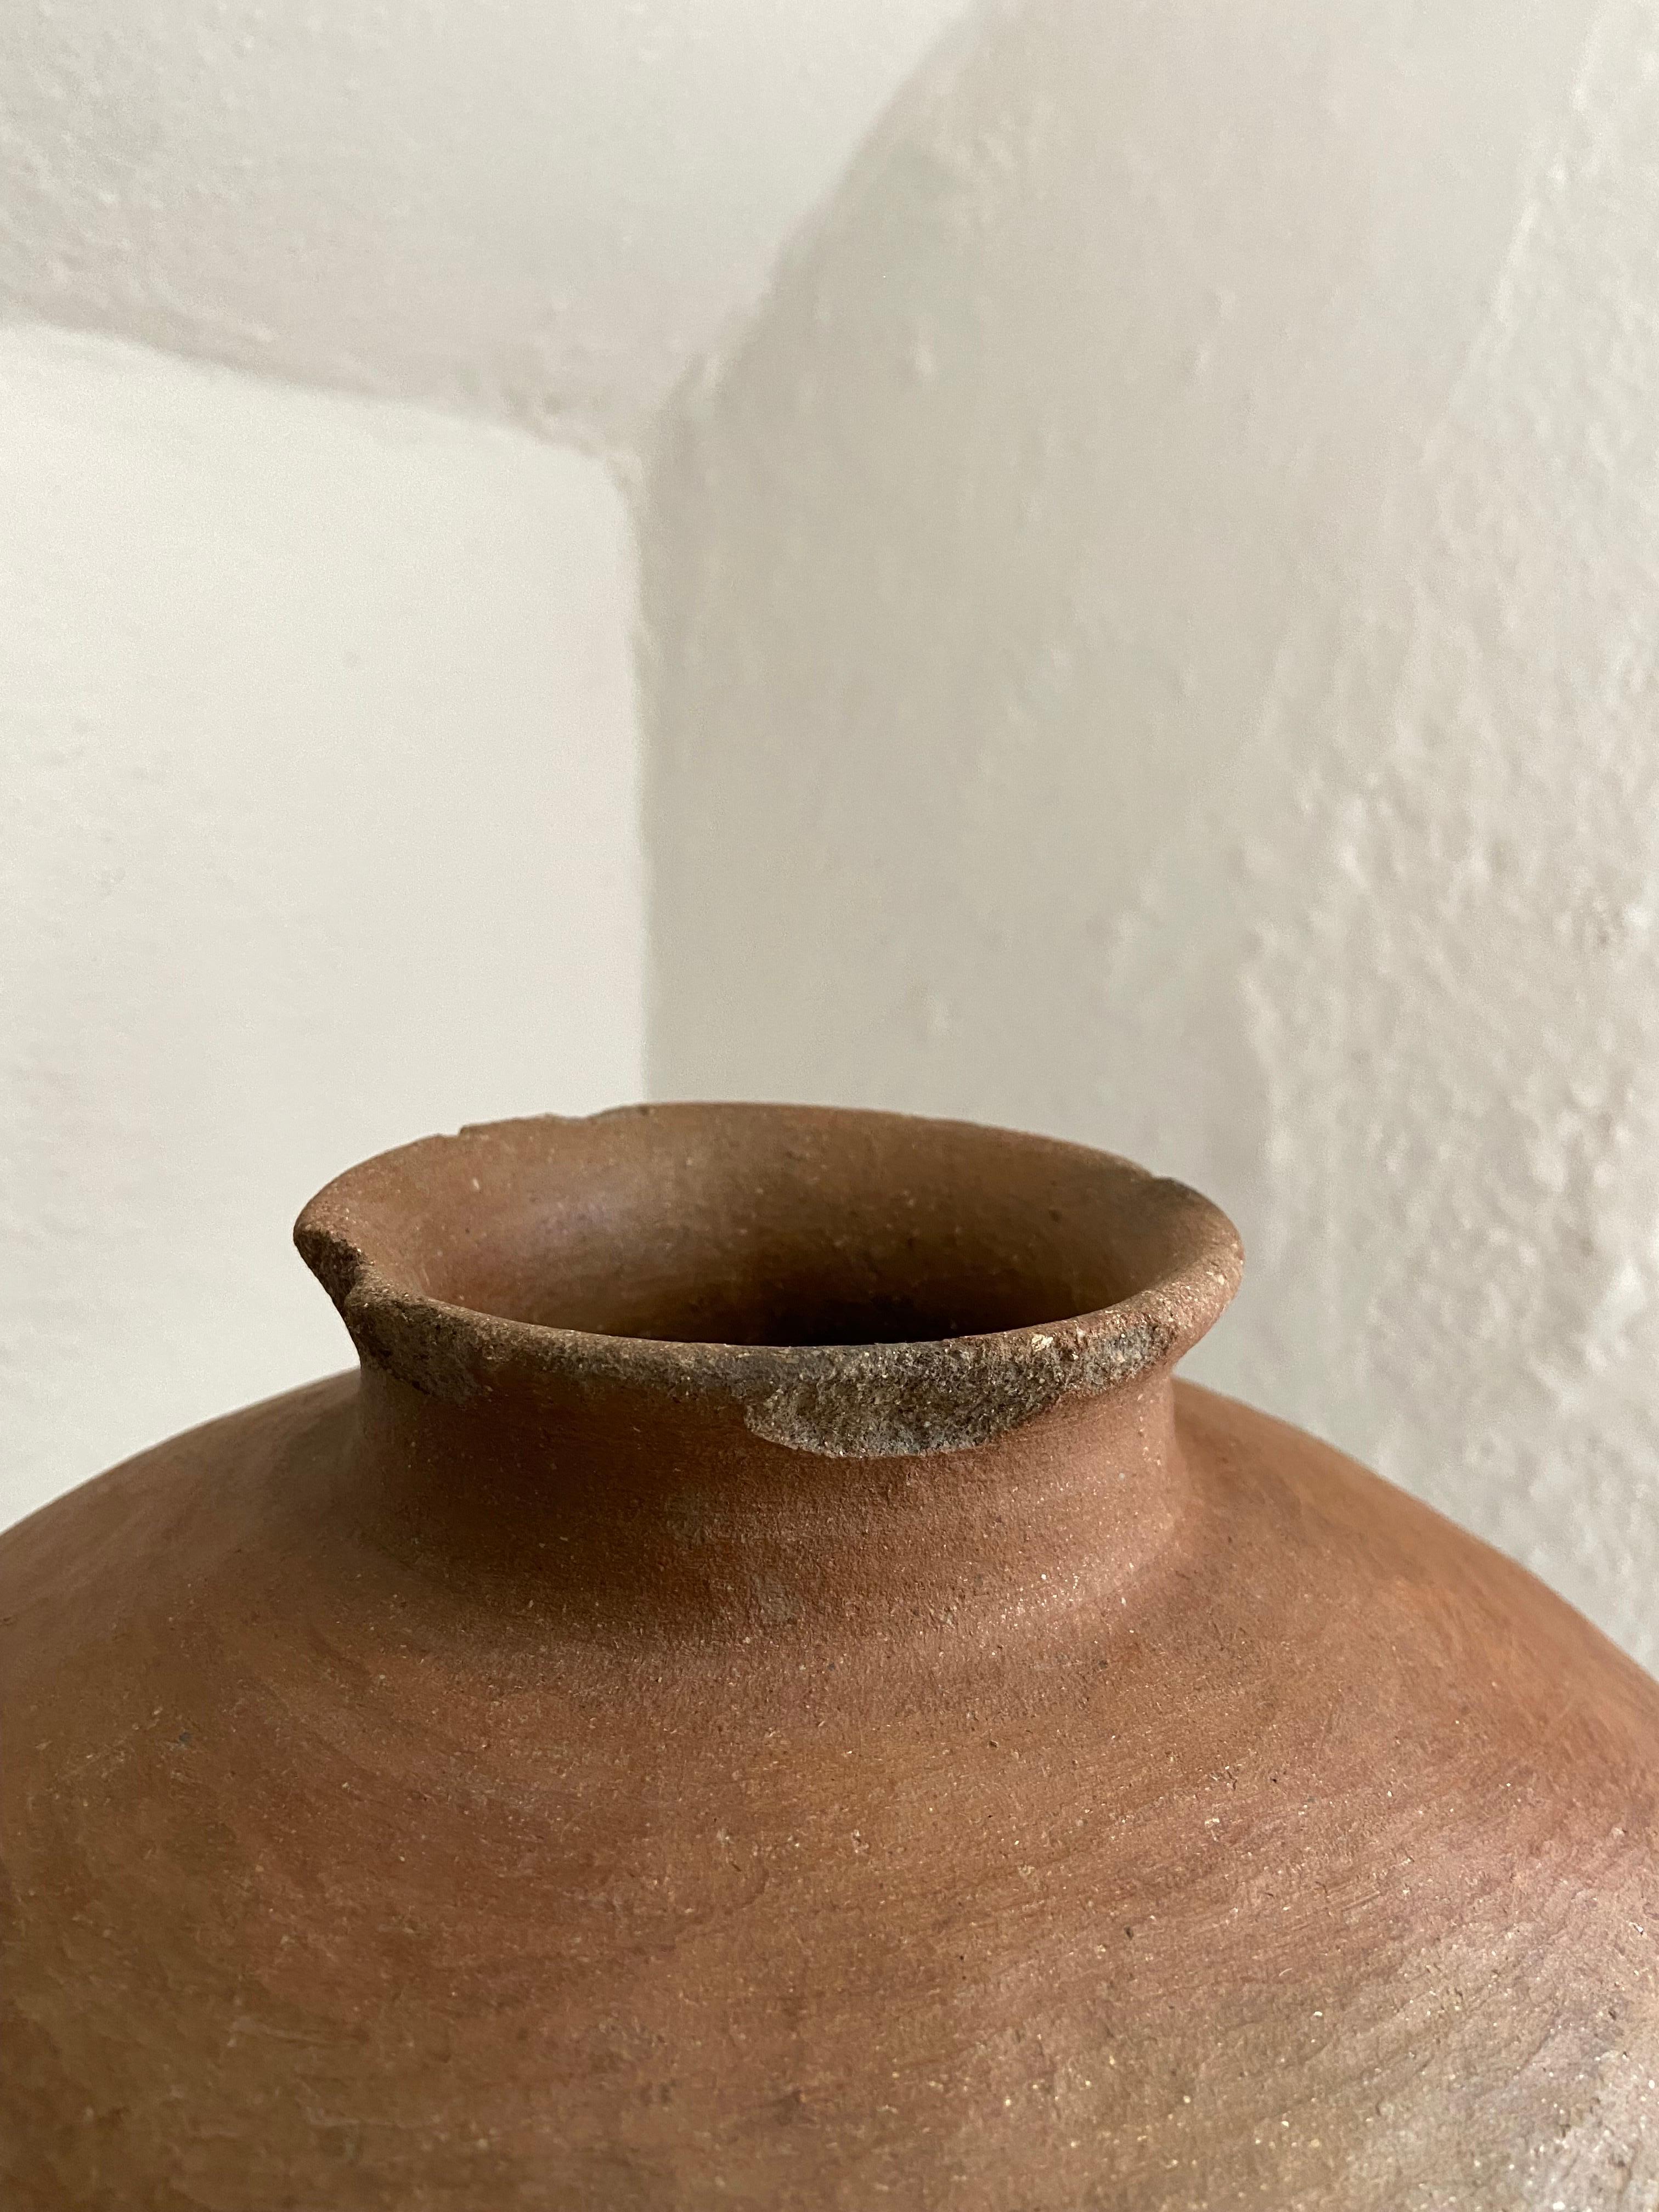 Fired Terracotta Pot From The Mixteca Region Of Oaxaca, Mexico, Circa 1940's